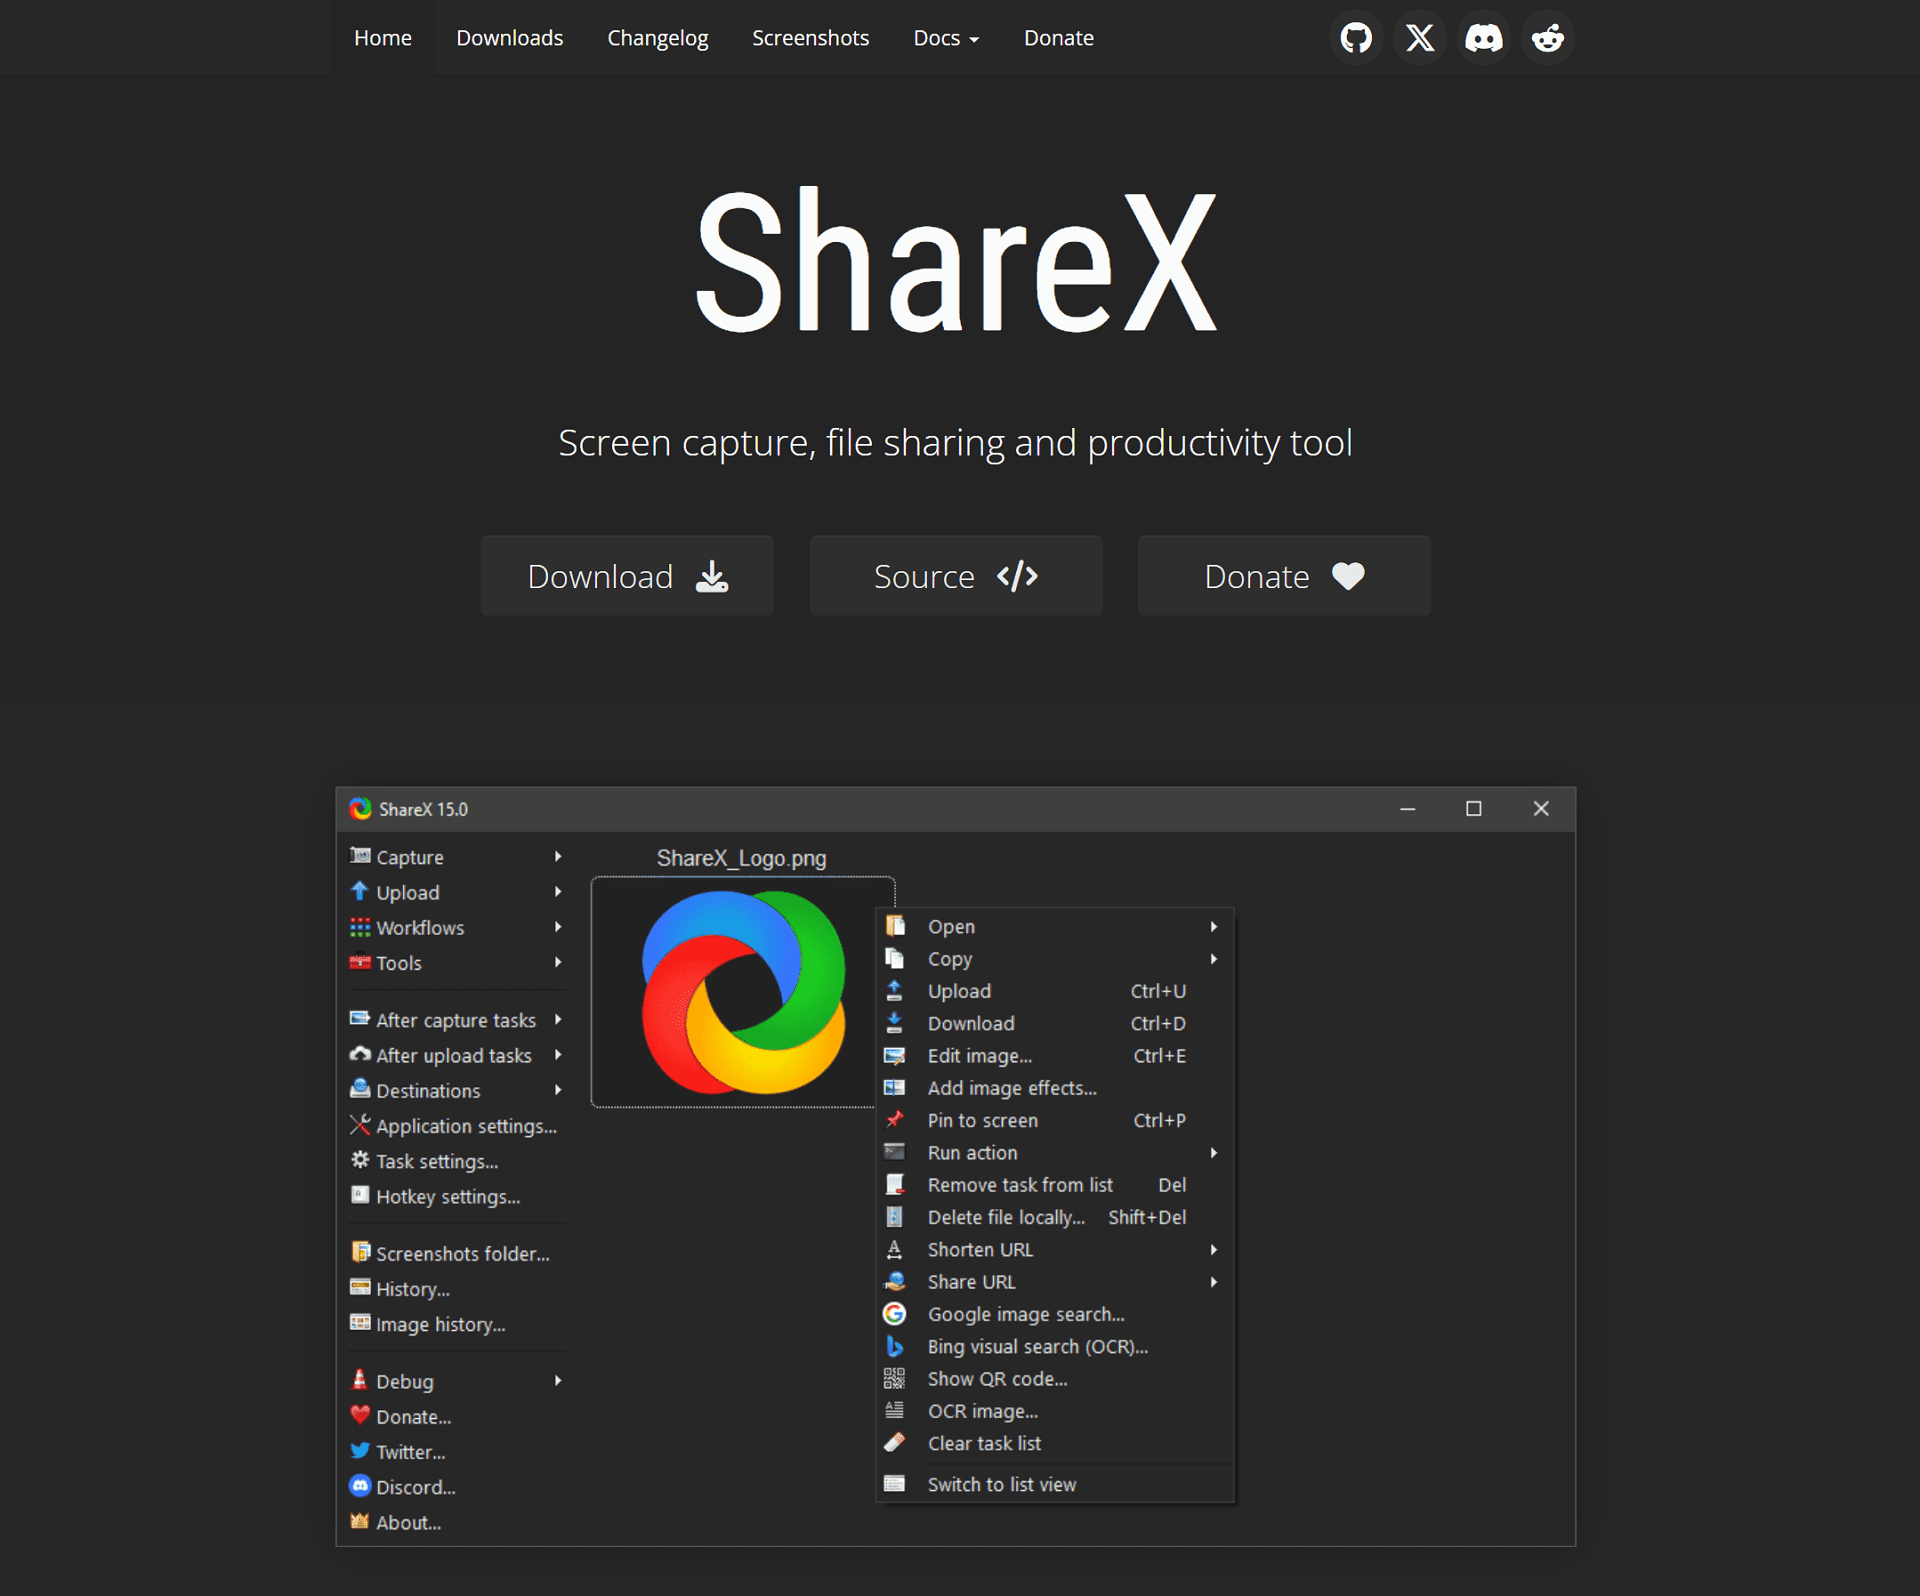 ShareX Homepage